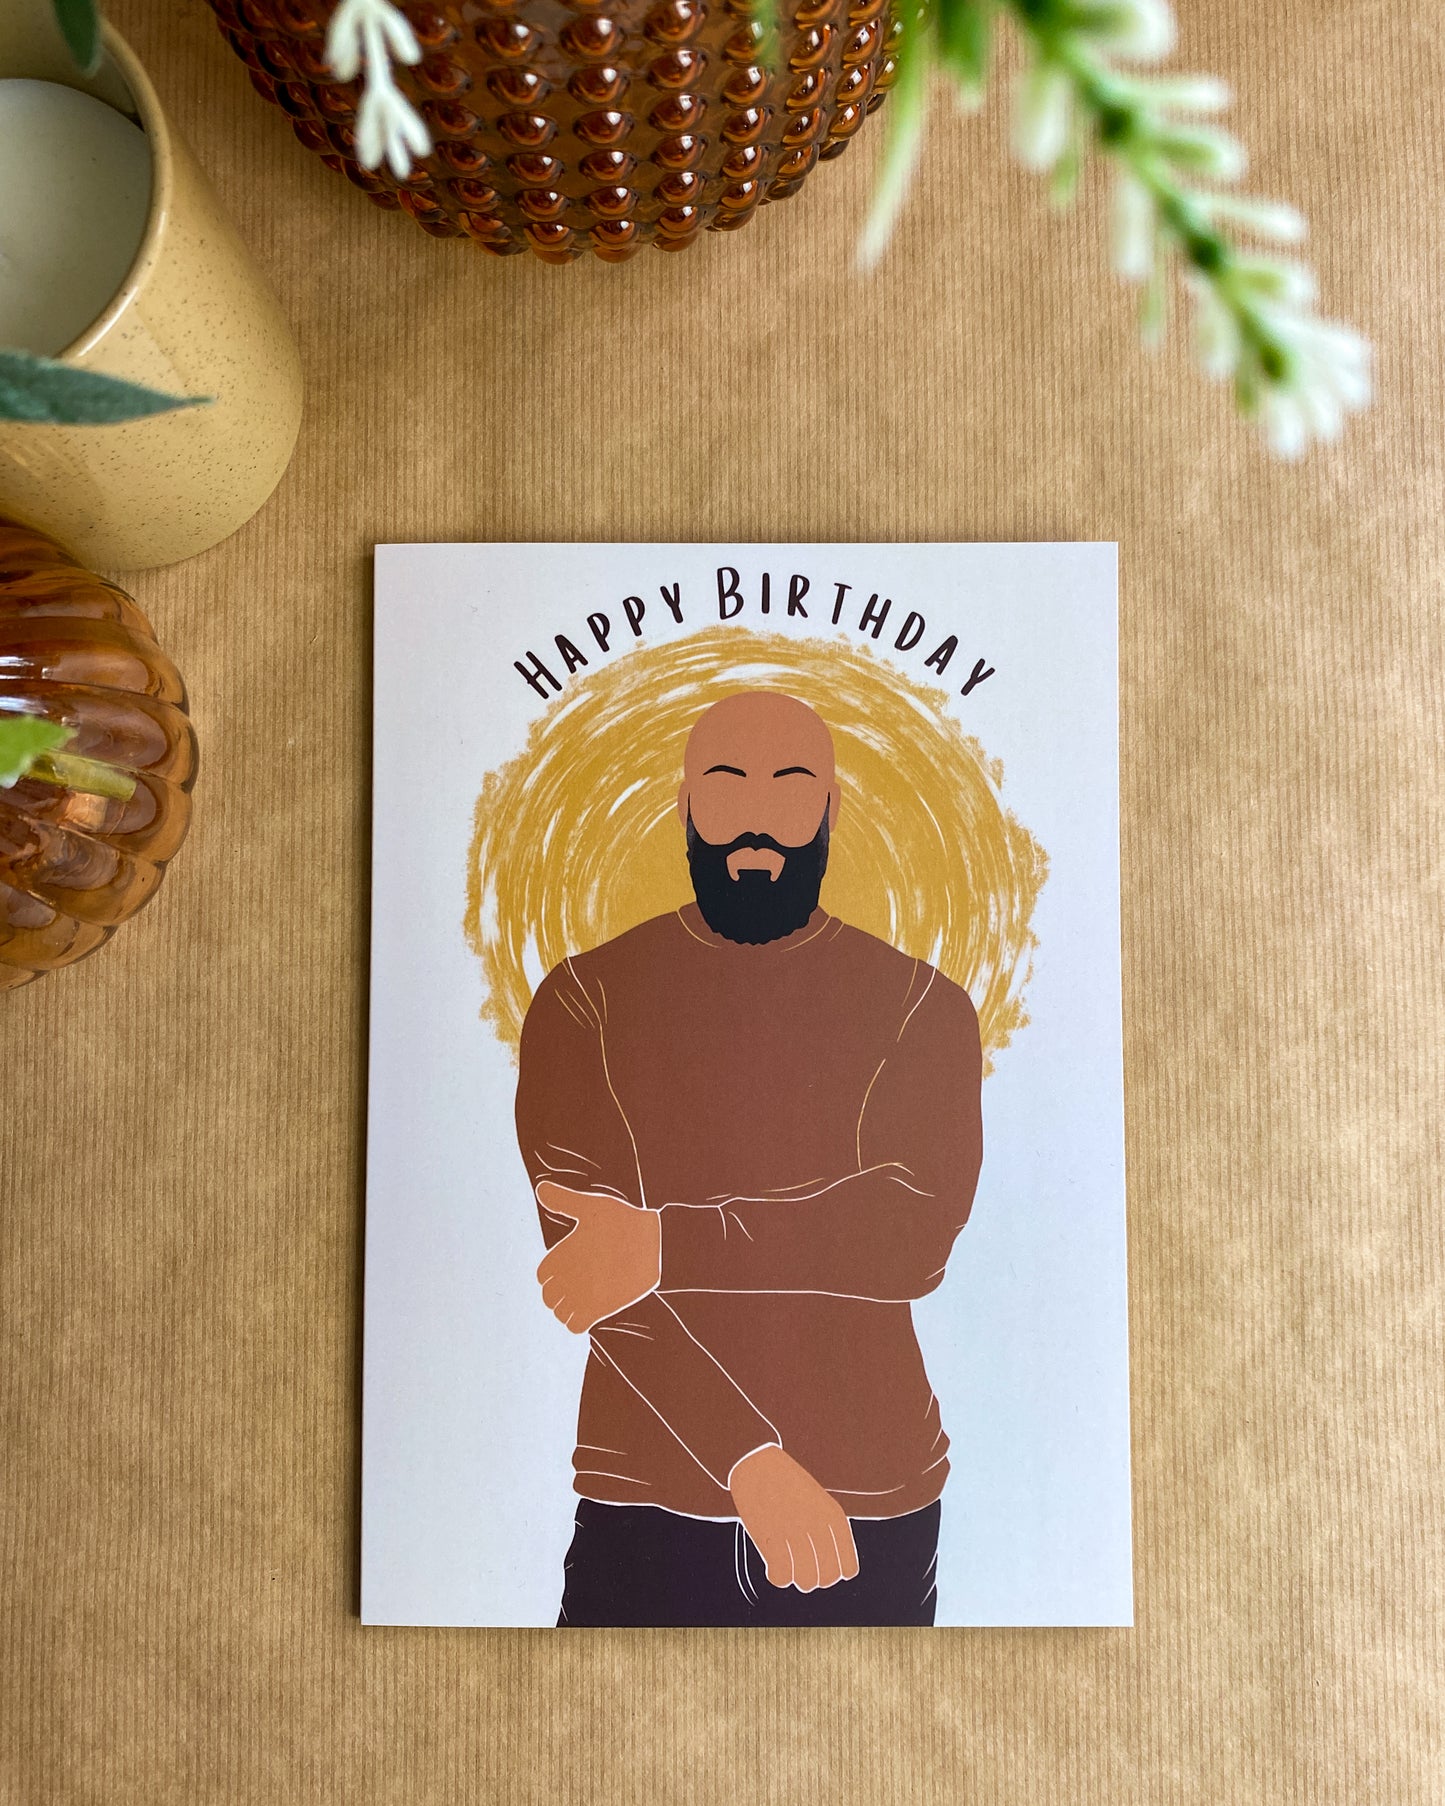 Bald & Bearded Mixed Race / Black Man Birthday Card. Black Dad Card.